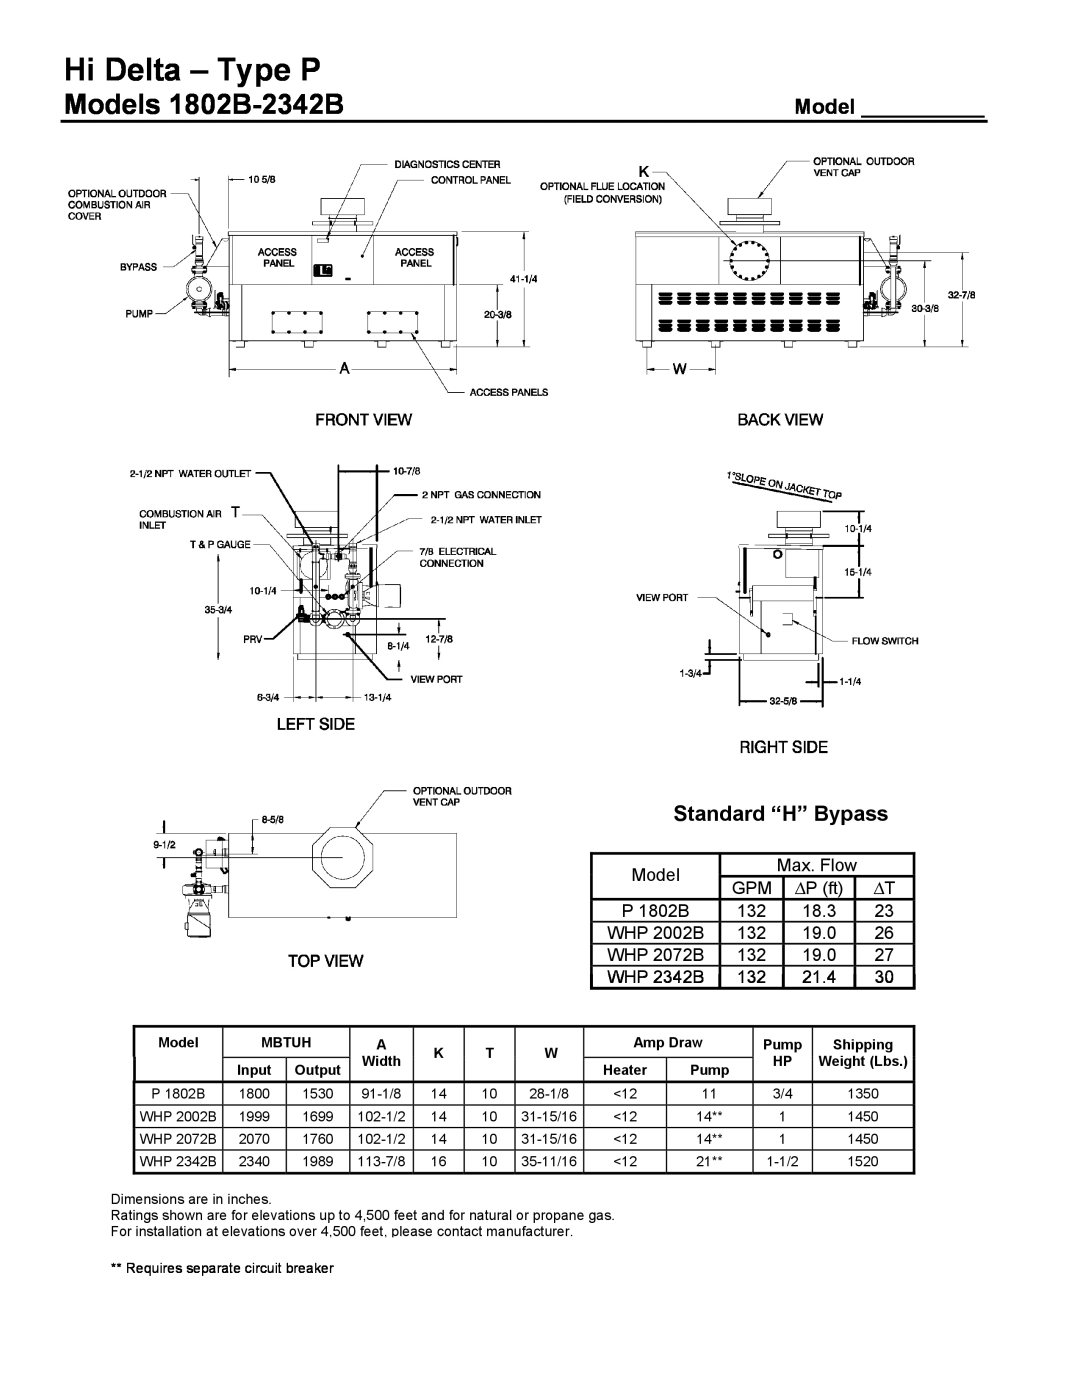 Raypak warranty Hi Delta - Type P, Standard “H” Bypass, Models 1802B-2342B 